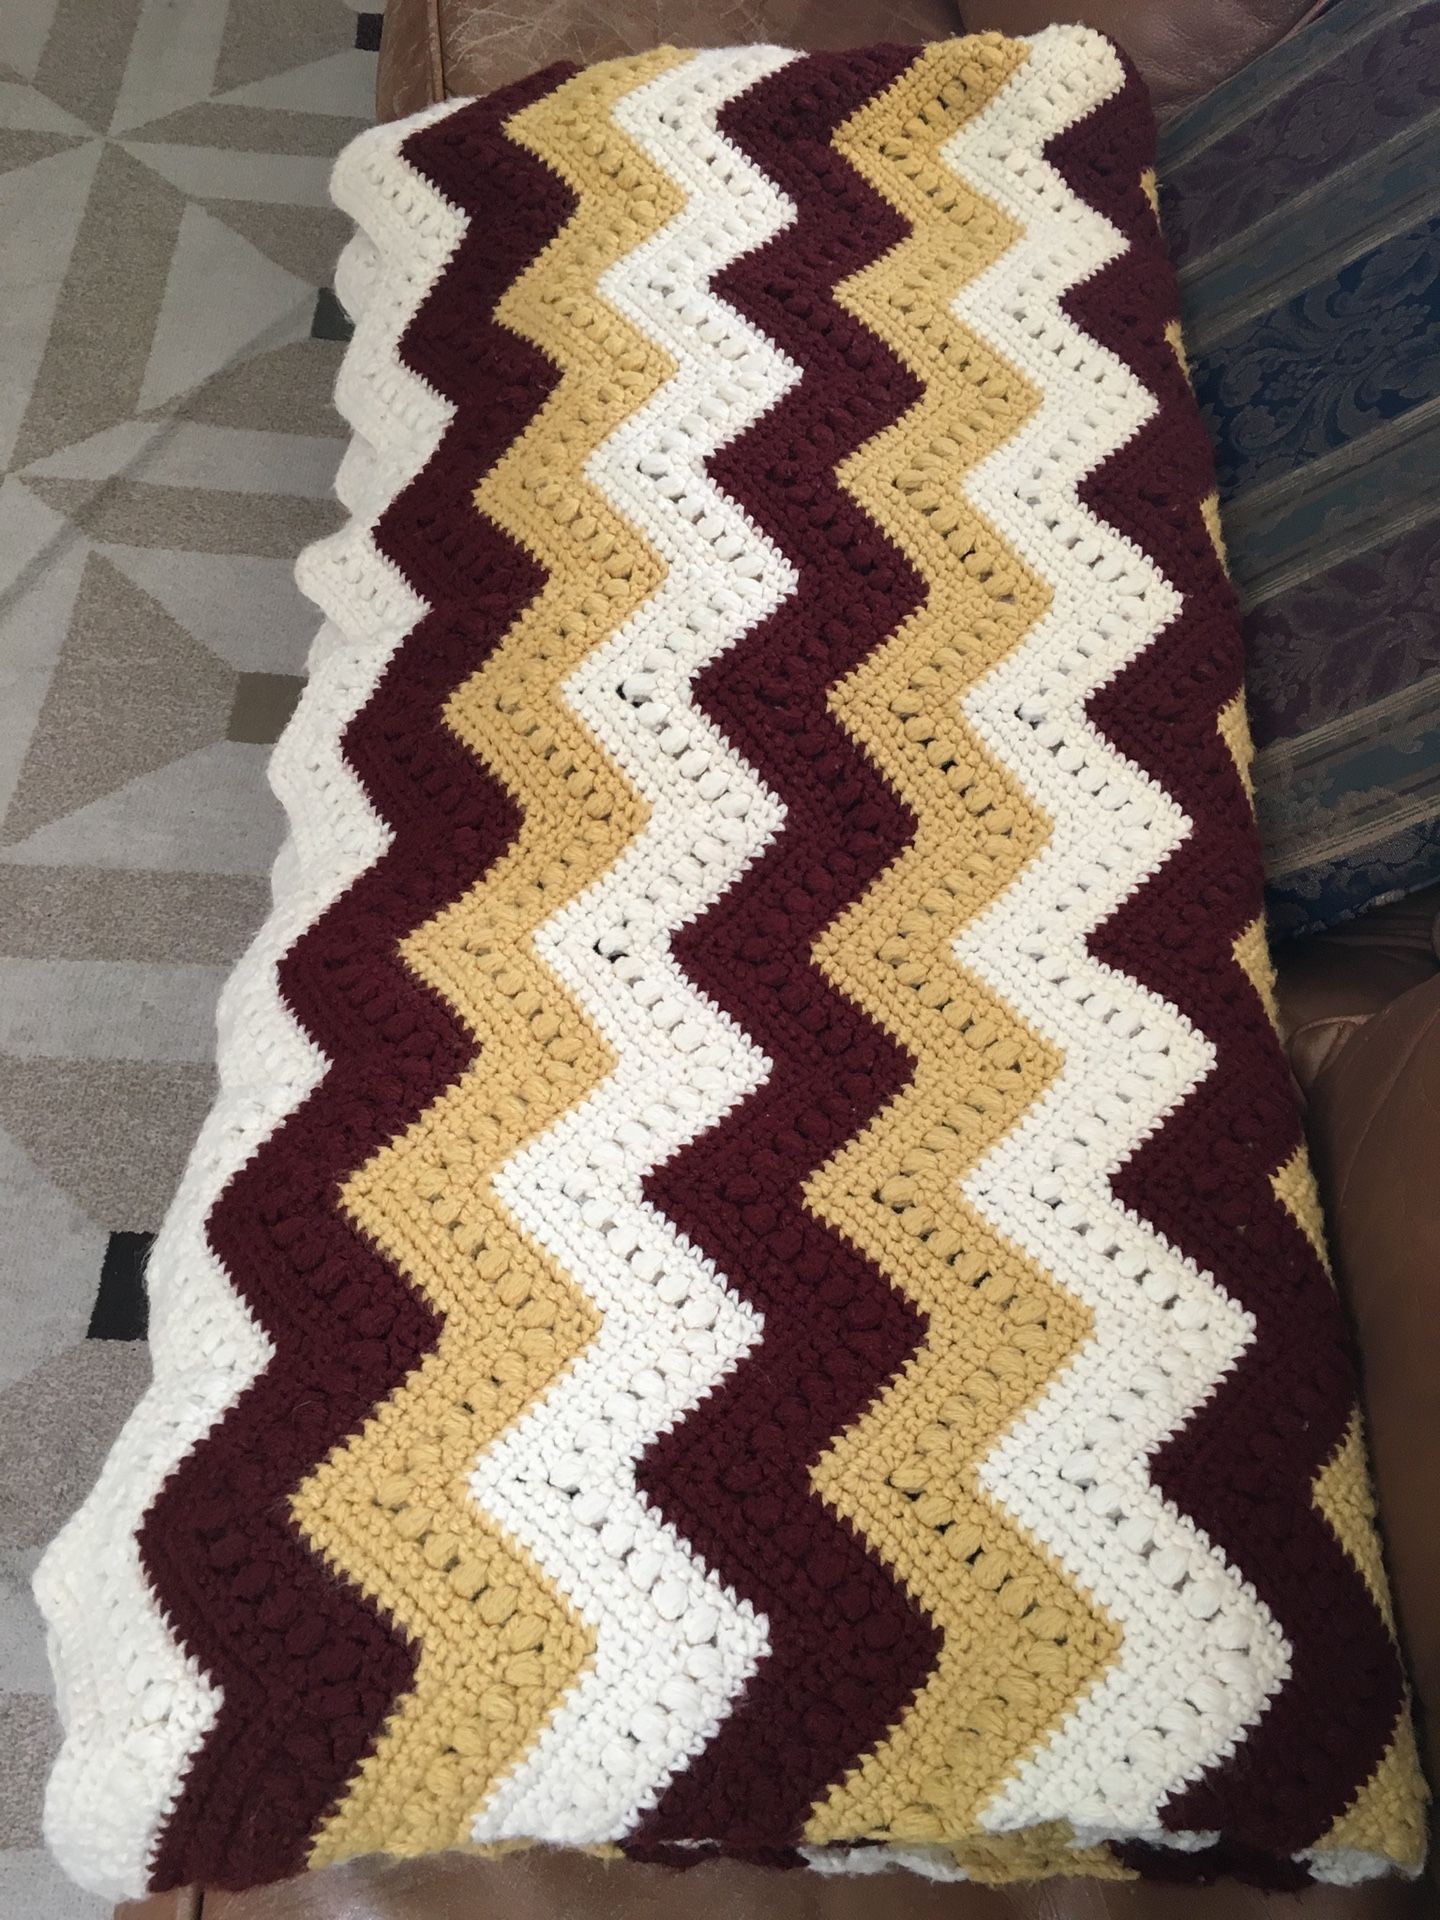 Brand new hand crocheted heavy lap blanket $50